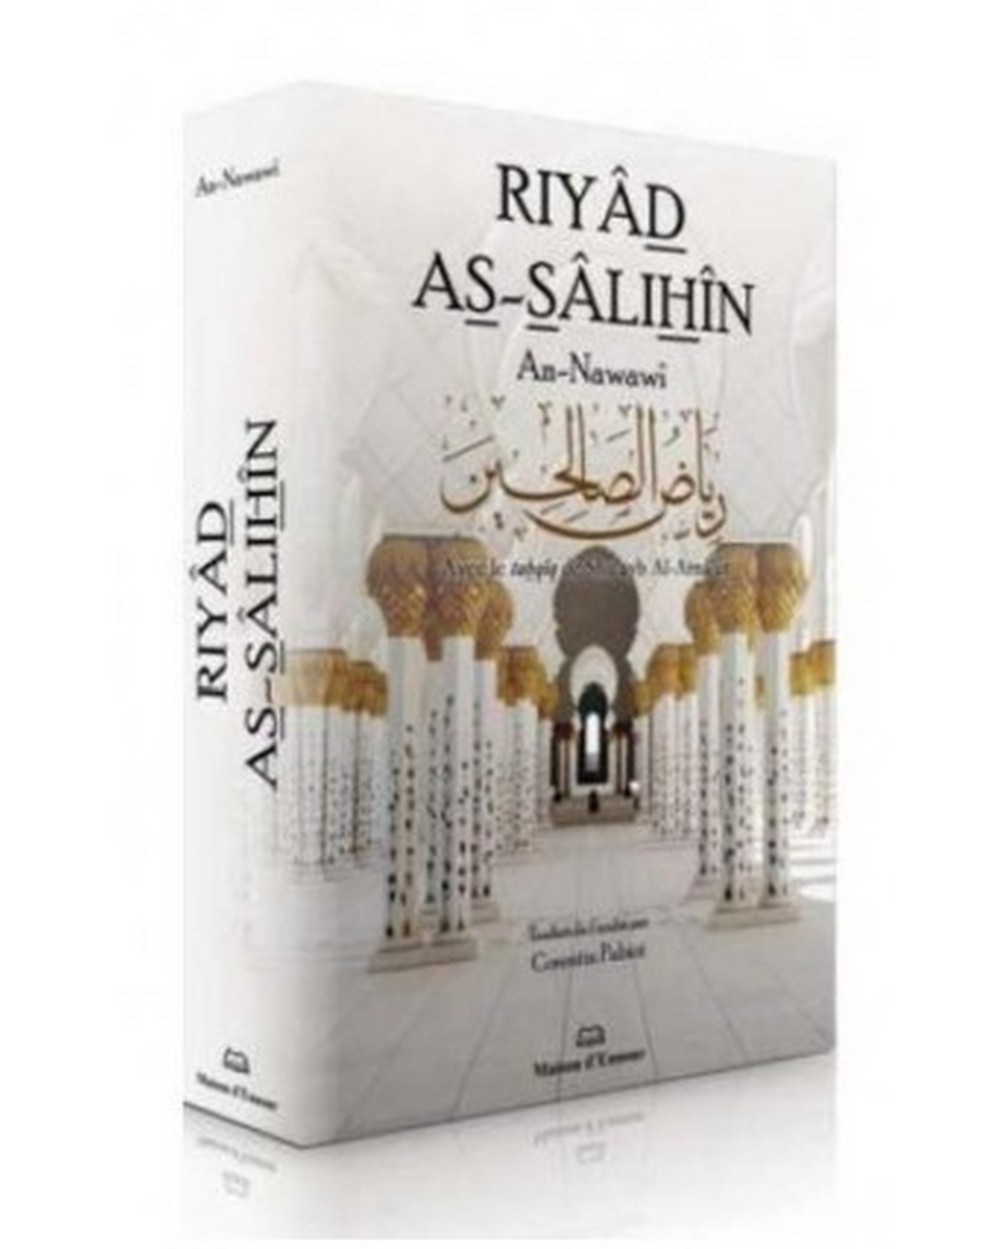 Riyad As-Salihin According to An-Nawawi (Pocket Size)